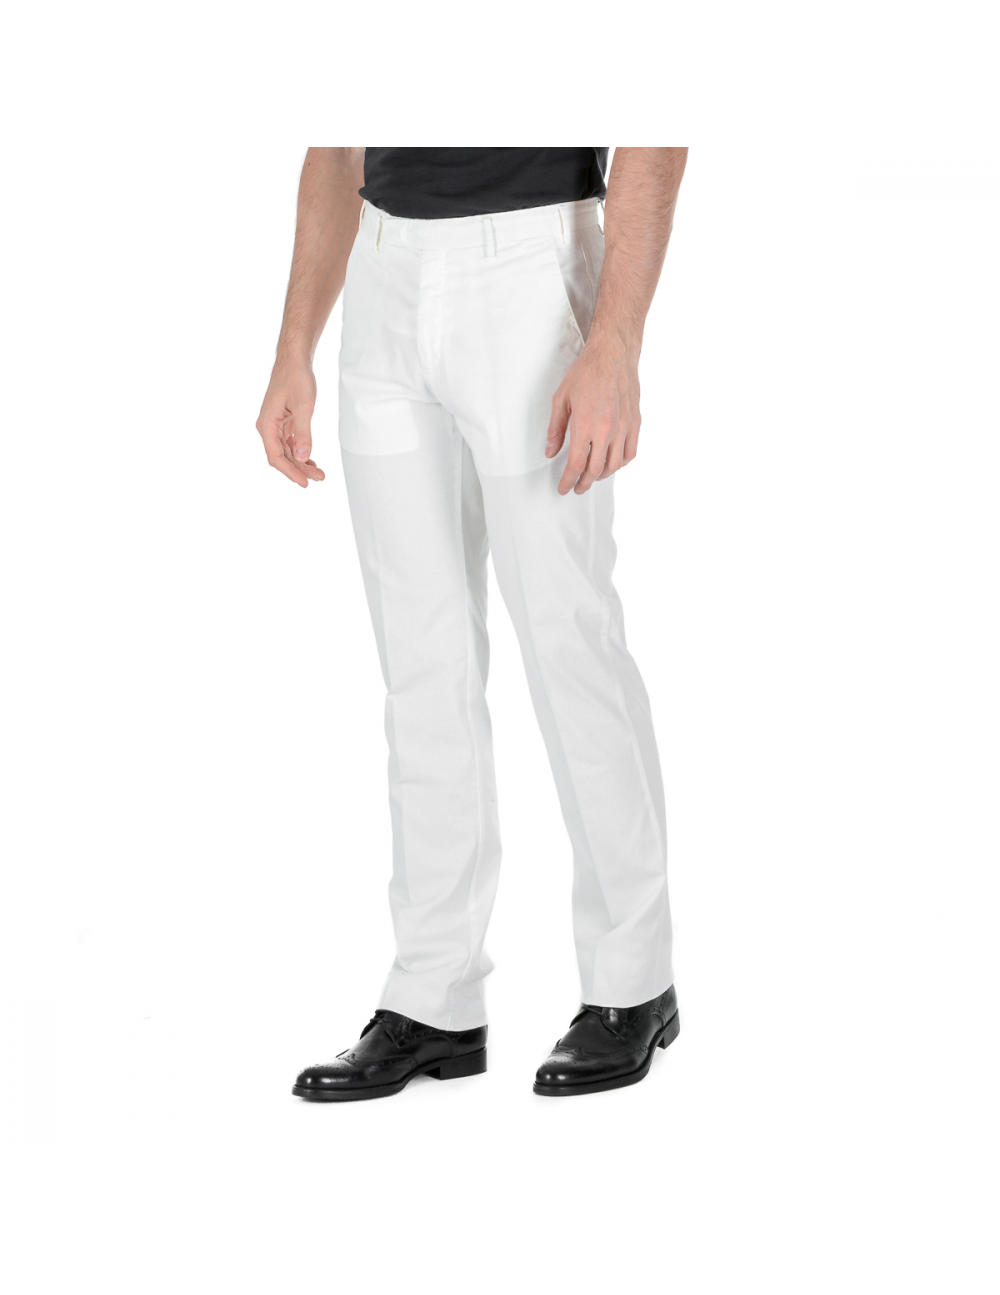 Armani Collezioni Mens Pants White - YuppyCollections